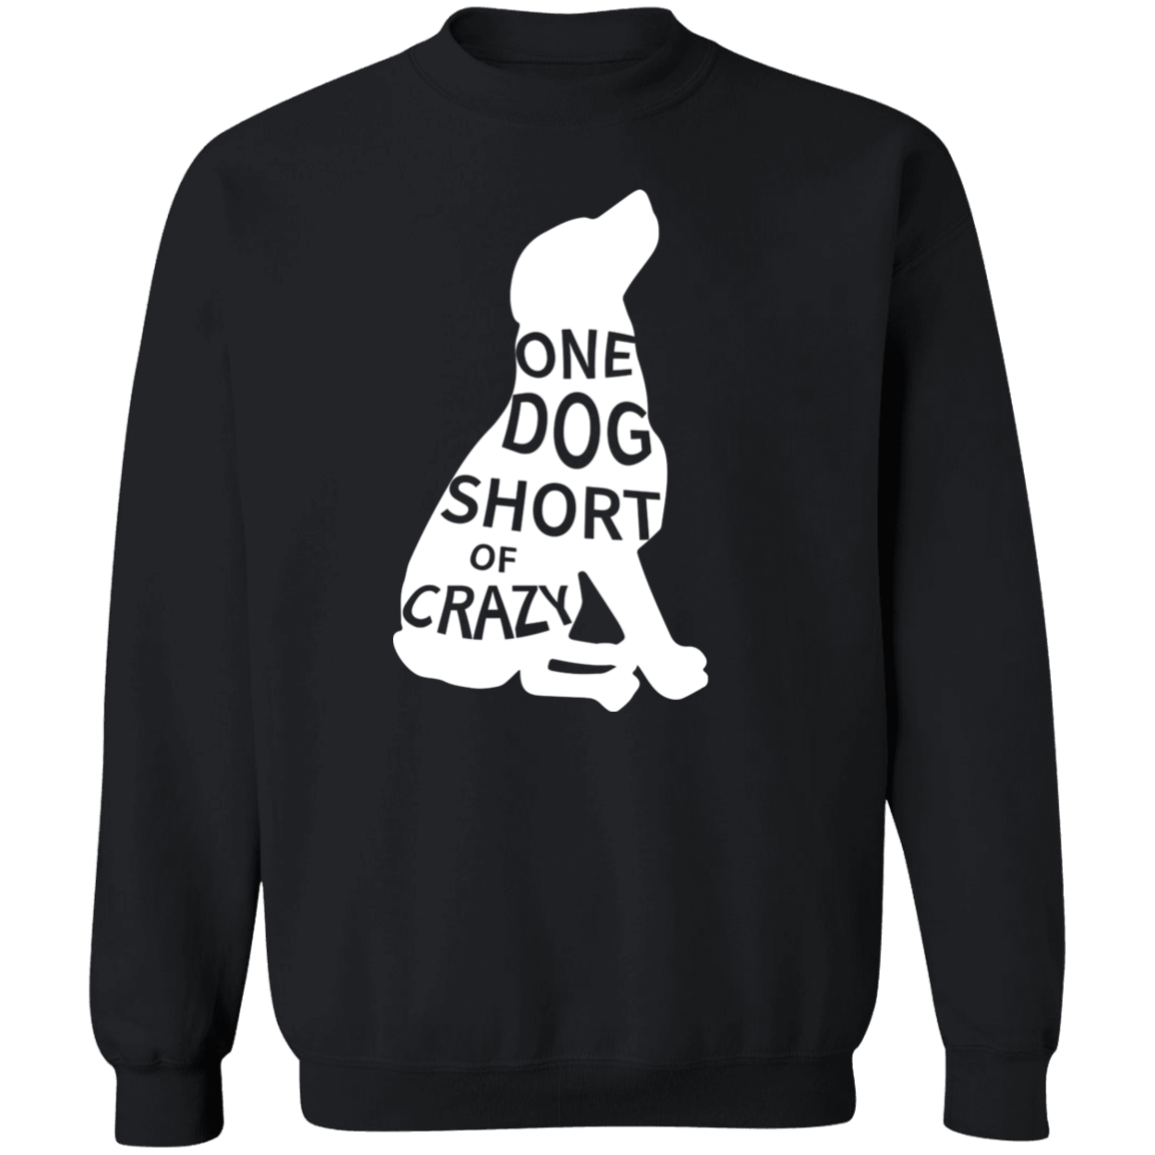 One Dog Short Of Crazy - Sweatshirt.